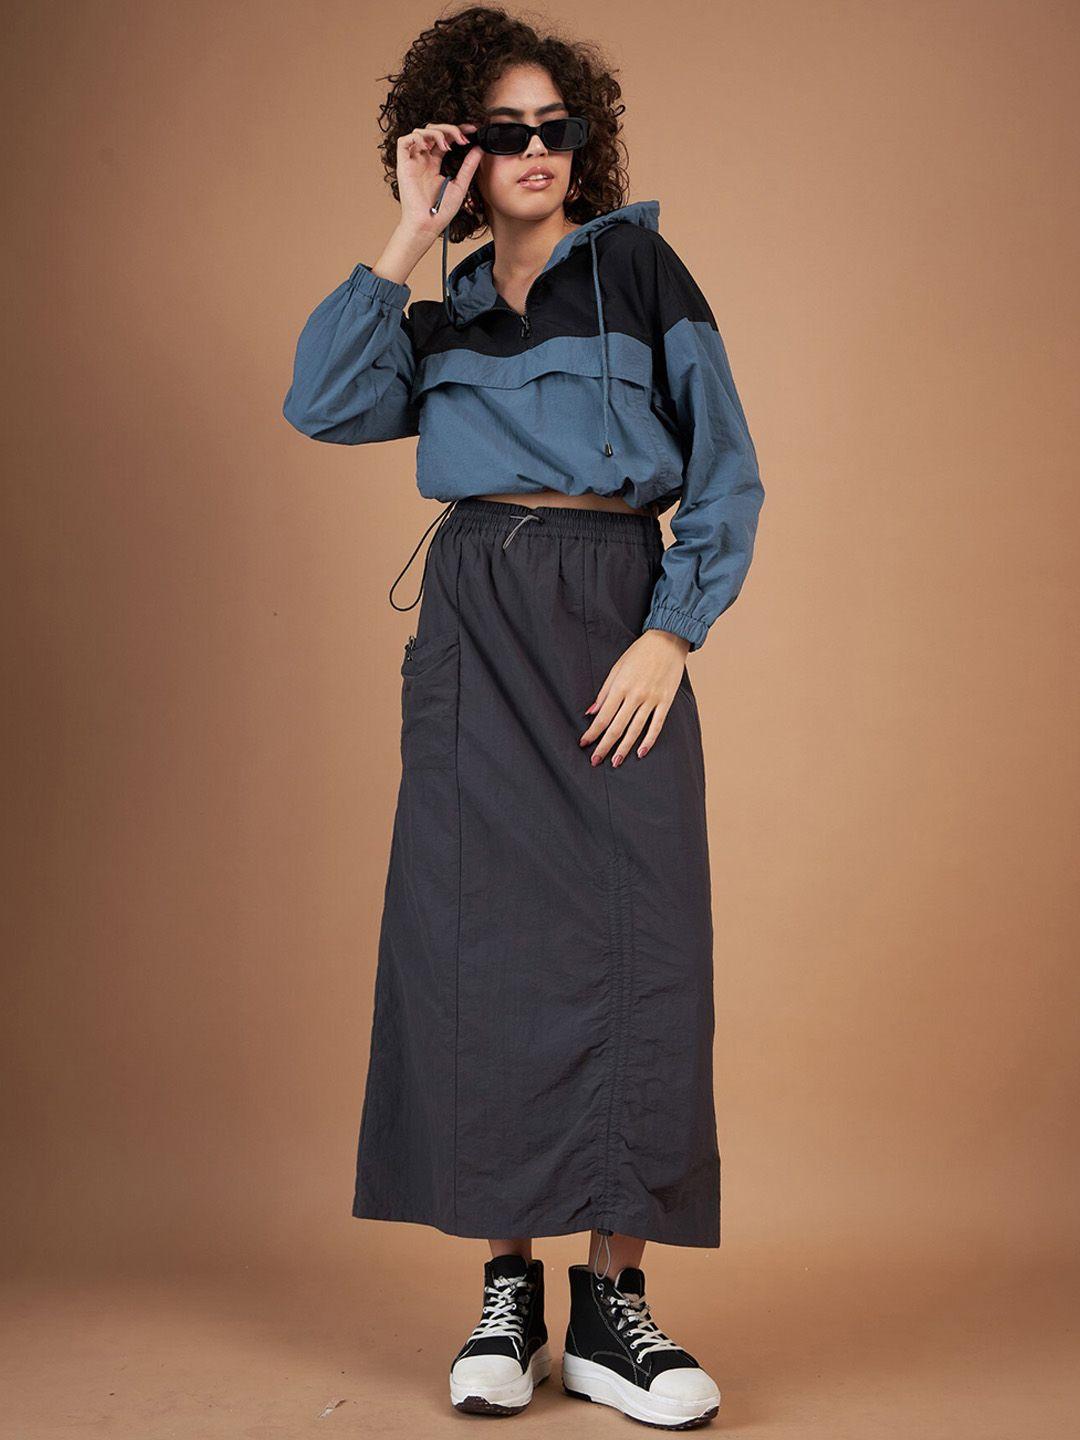 sassafras black colourblocked hooded crop top with skirt